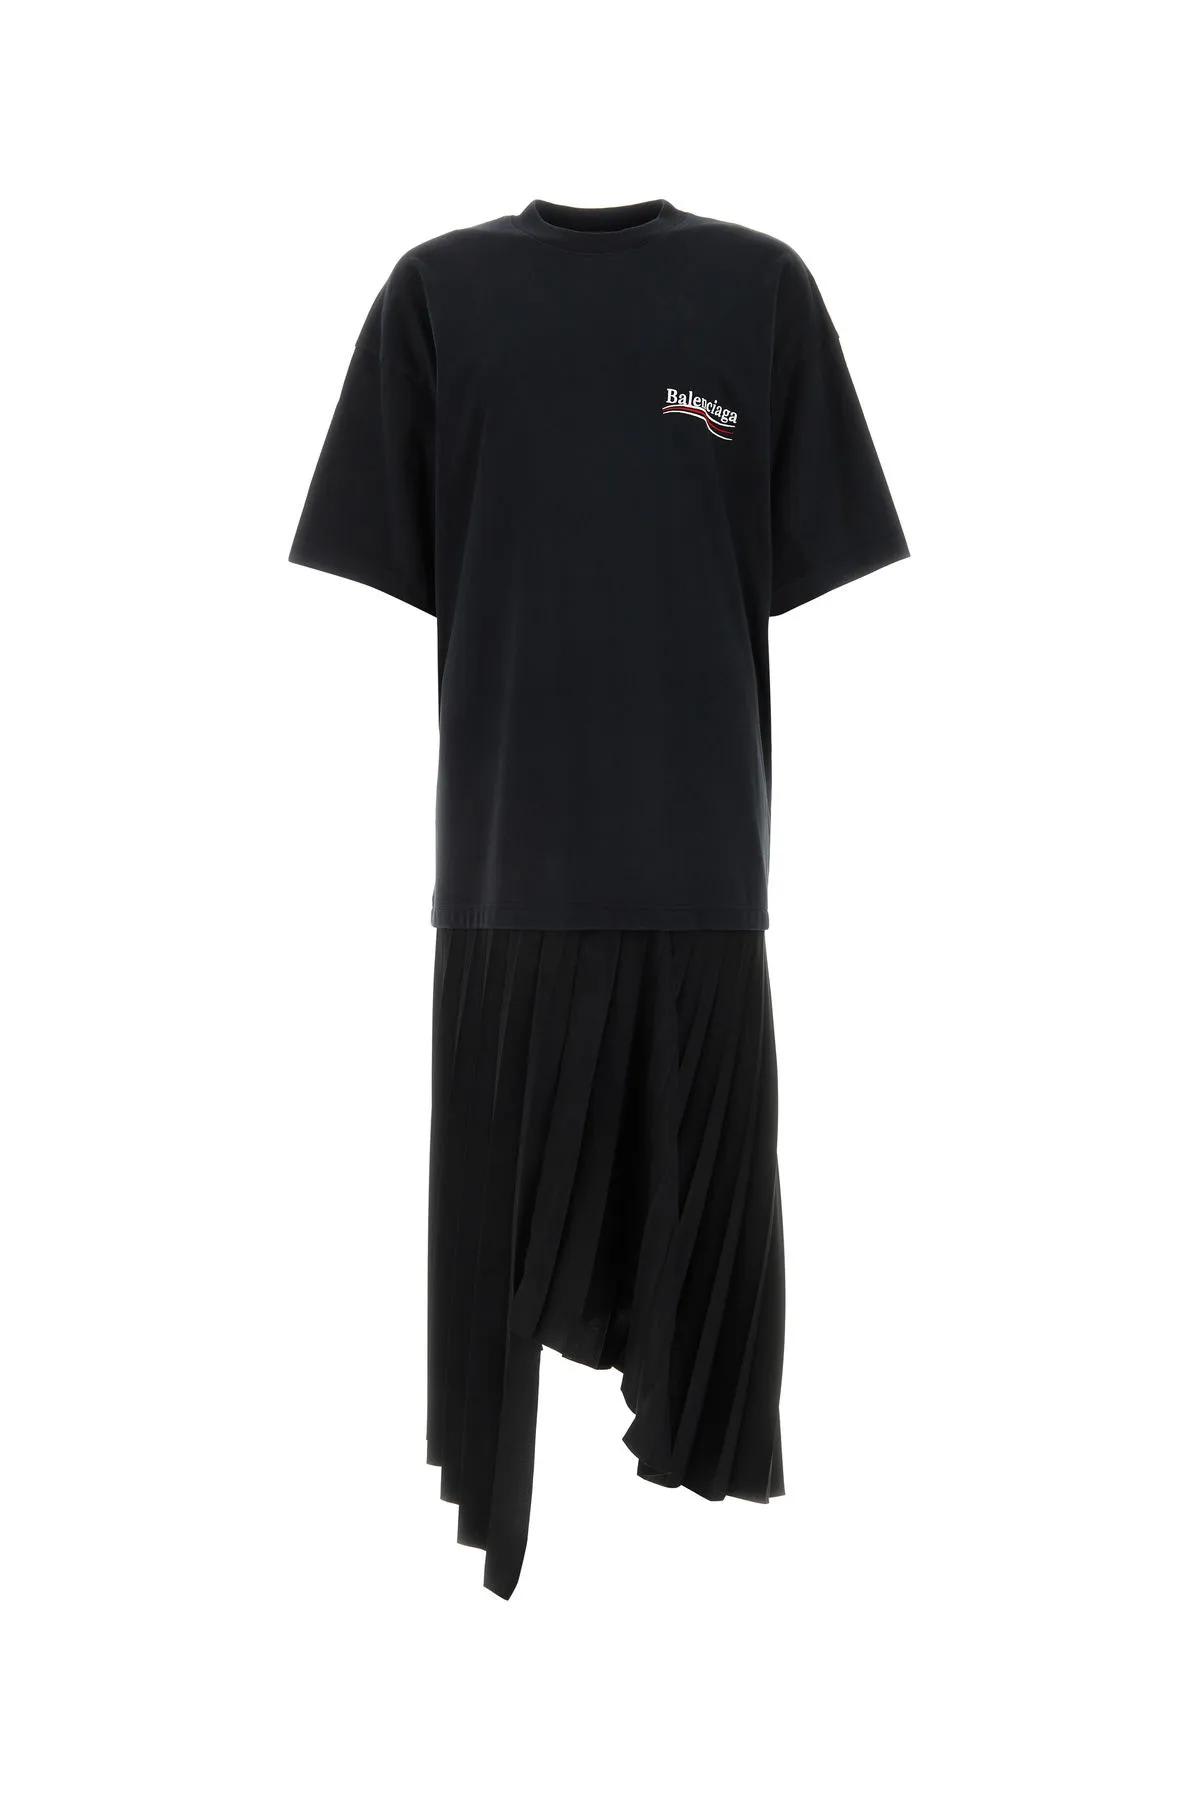 BALENCIAGA BLACK COTTON POLITICAL CAMPAIGN T-SHIRT DRESS